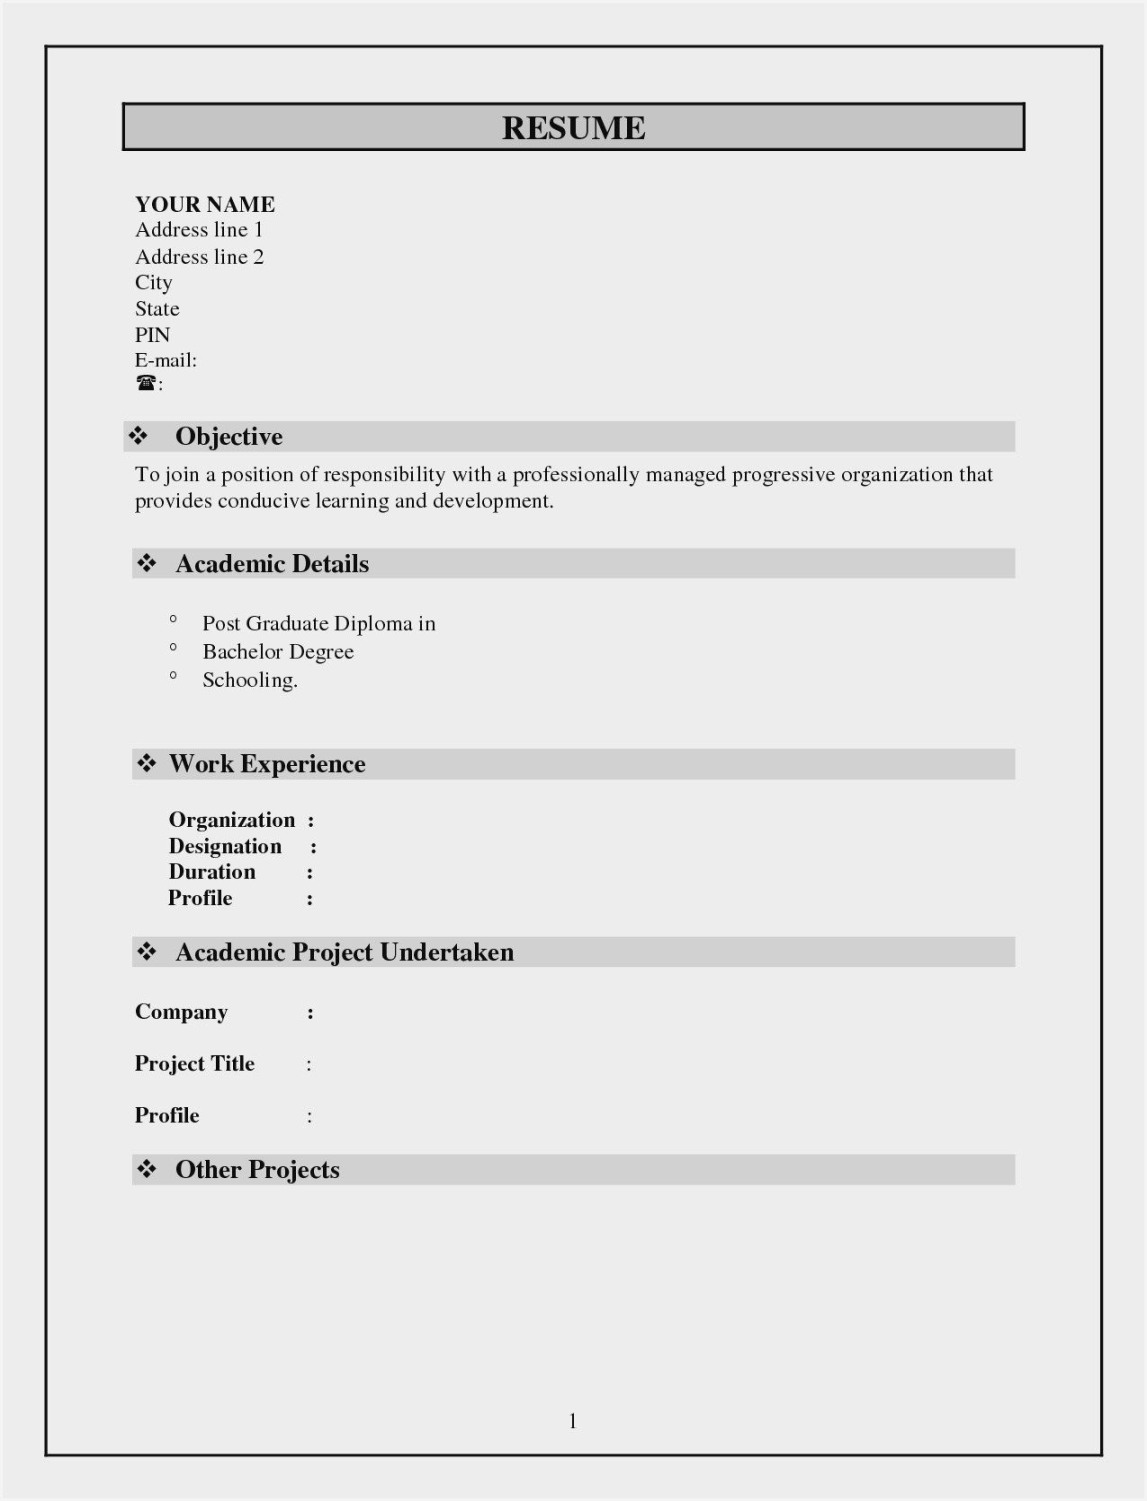 simple resume format free download in ms word free resume